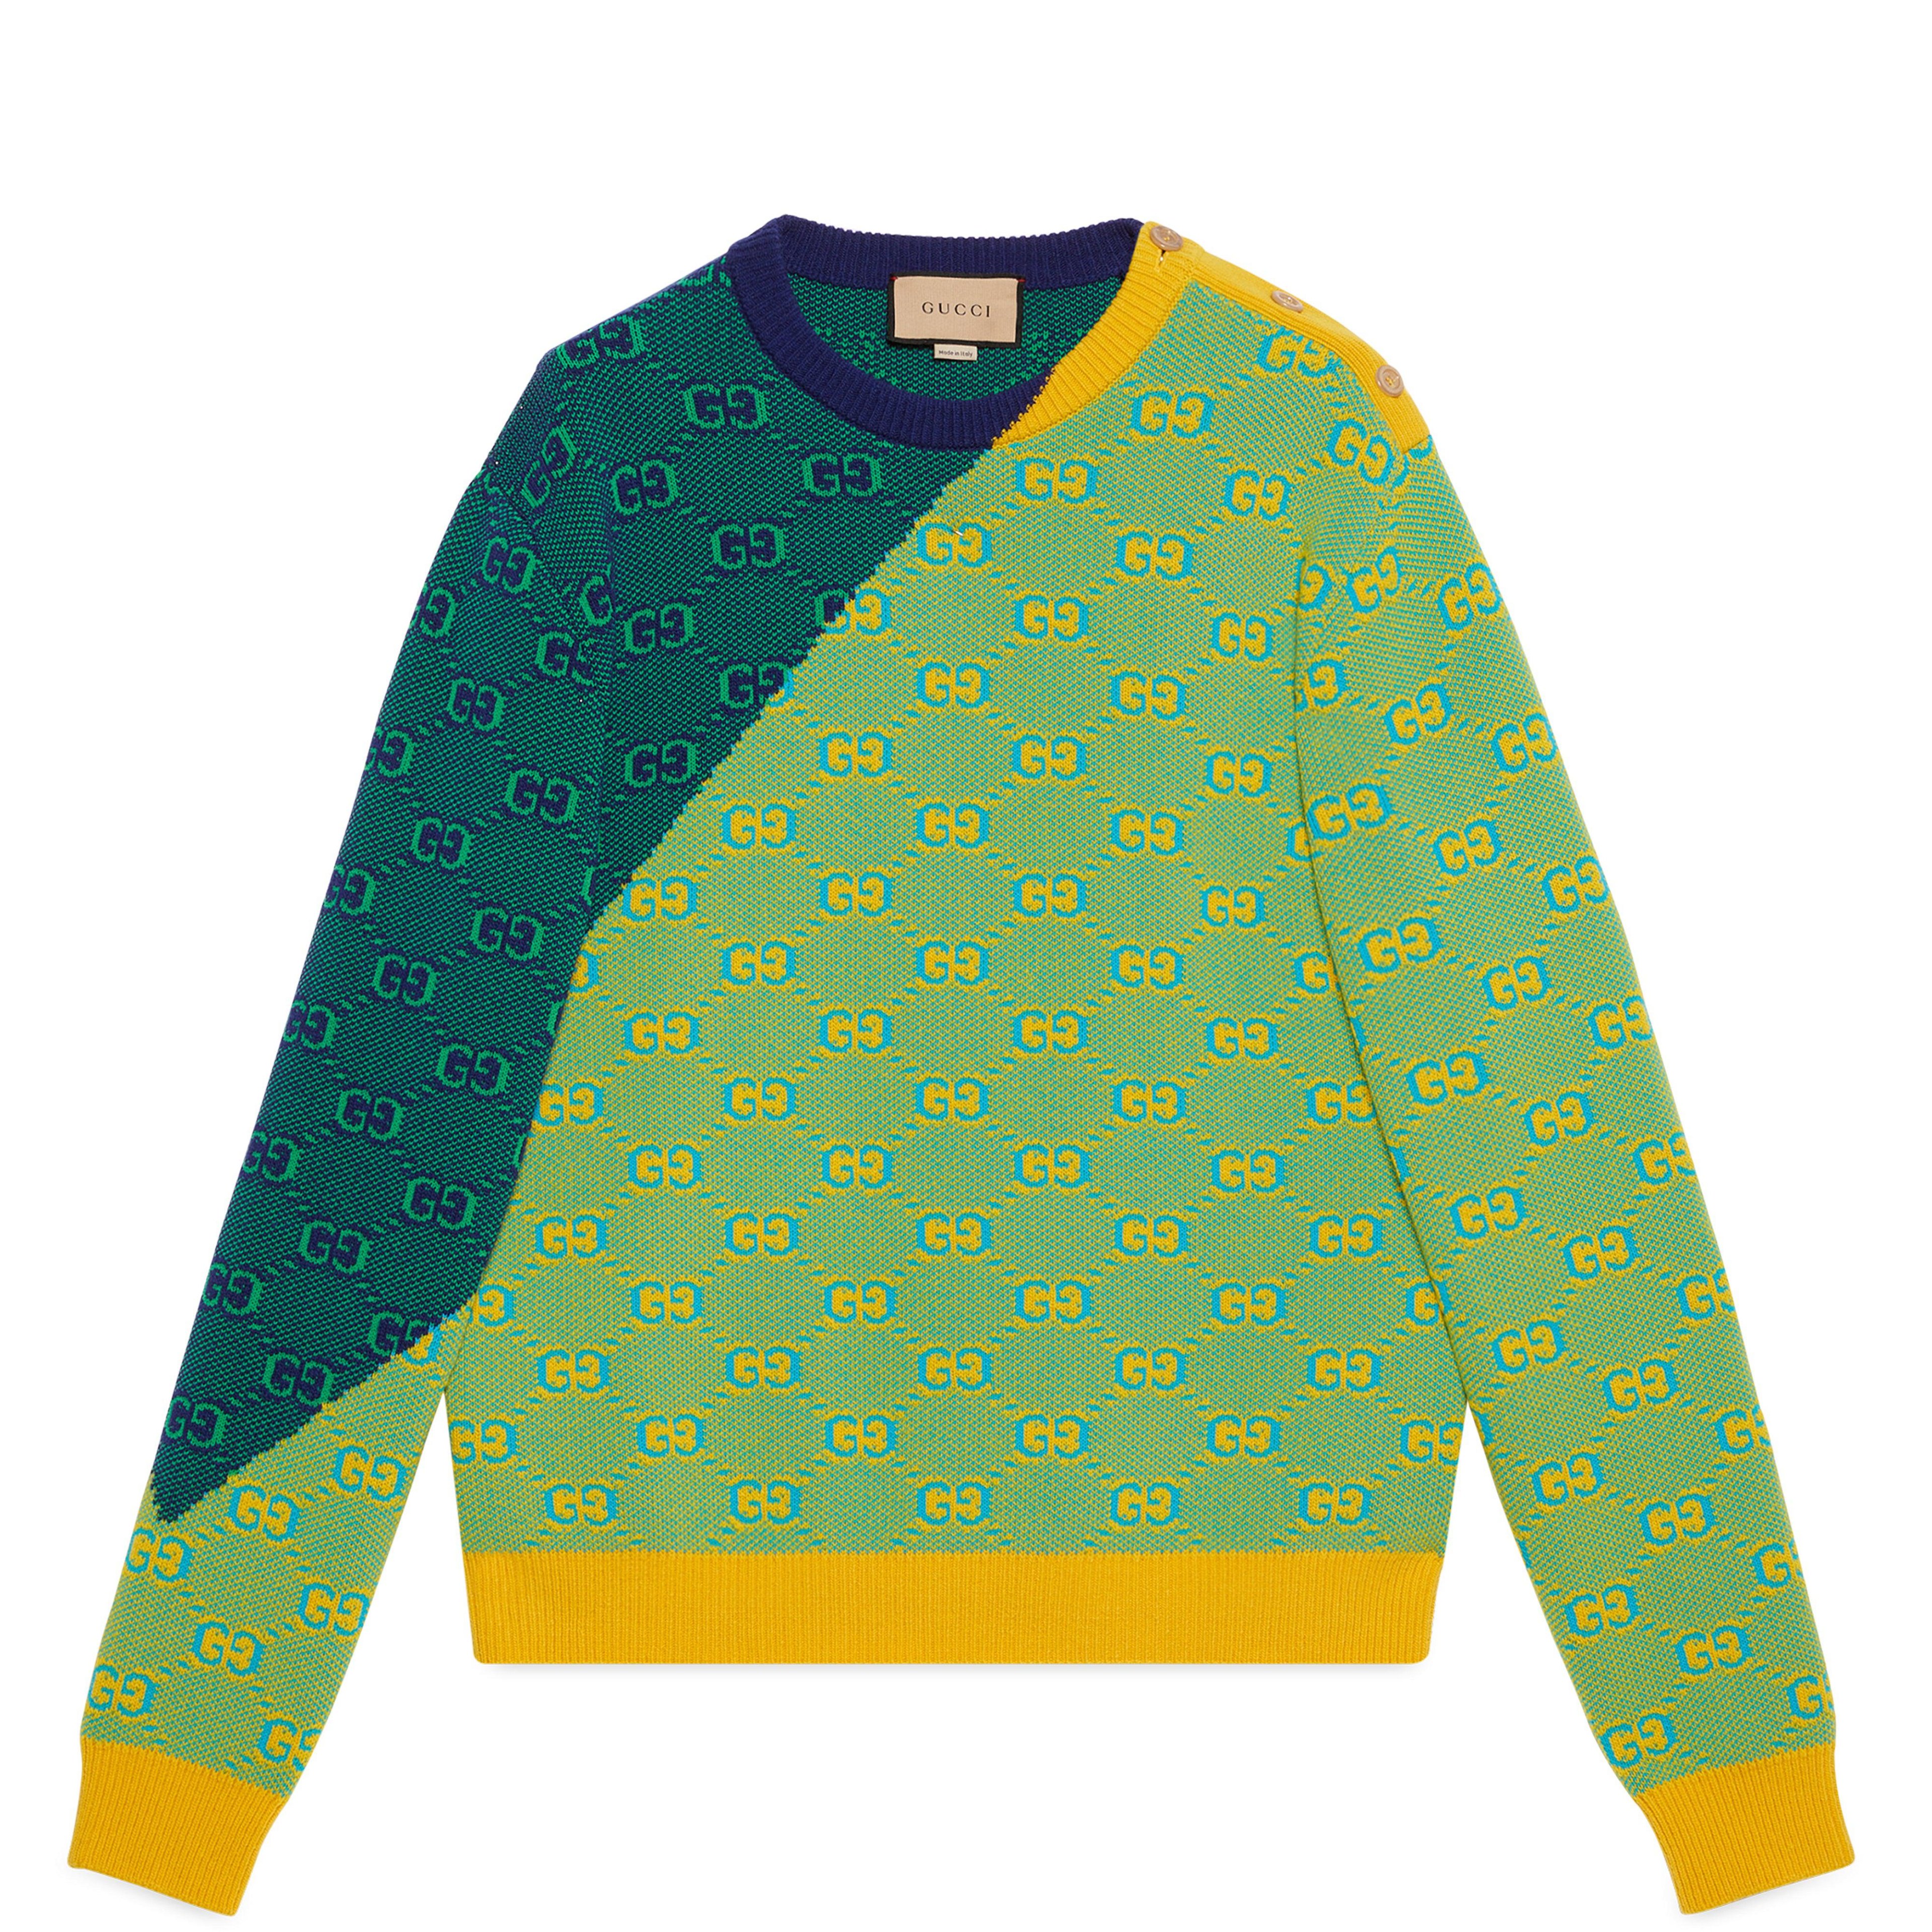 Gucci - Men’s GG Jacquard Wool Knit Jumper - (Green/Yellow) by GUCCI